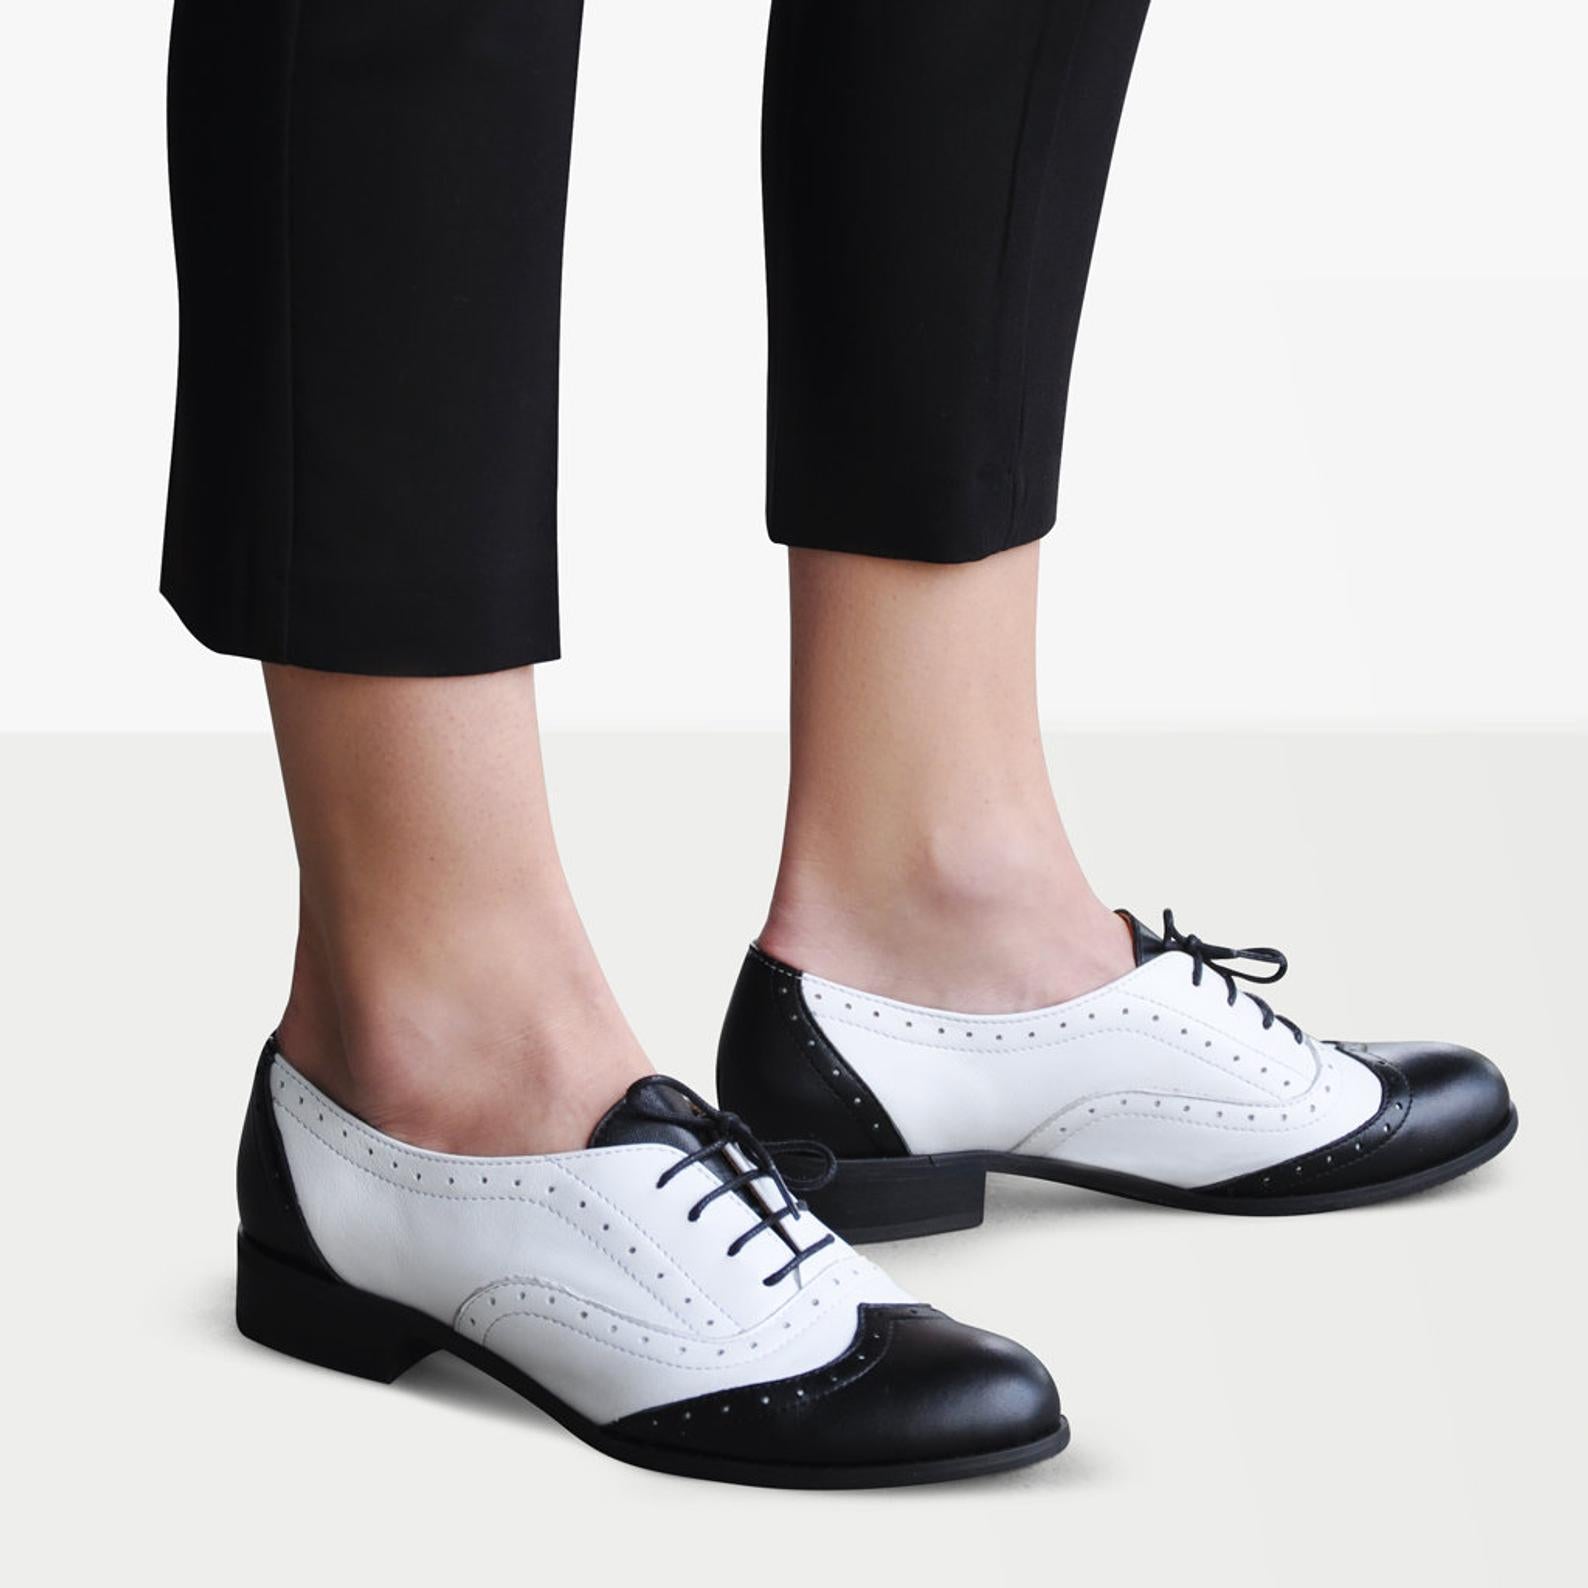 Spectator shoes womens by Julia Bo | Custom & Boots - Julia Bo - Women's Oxfords